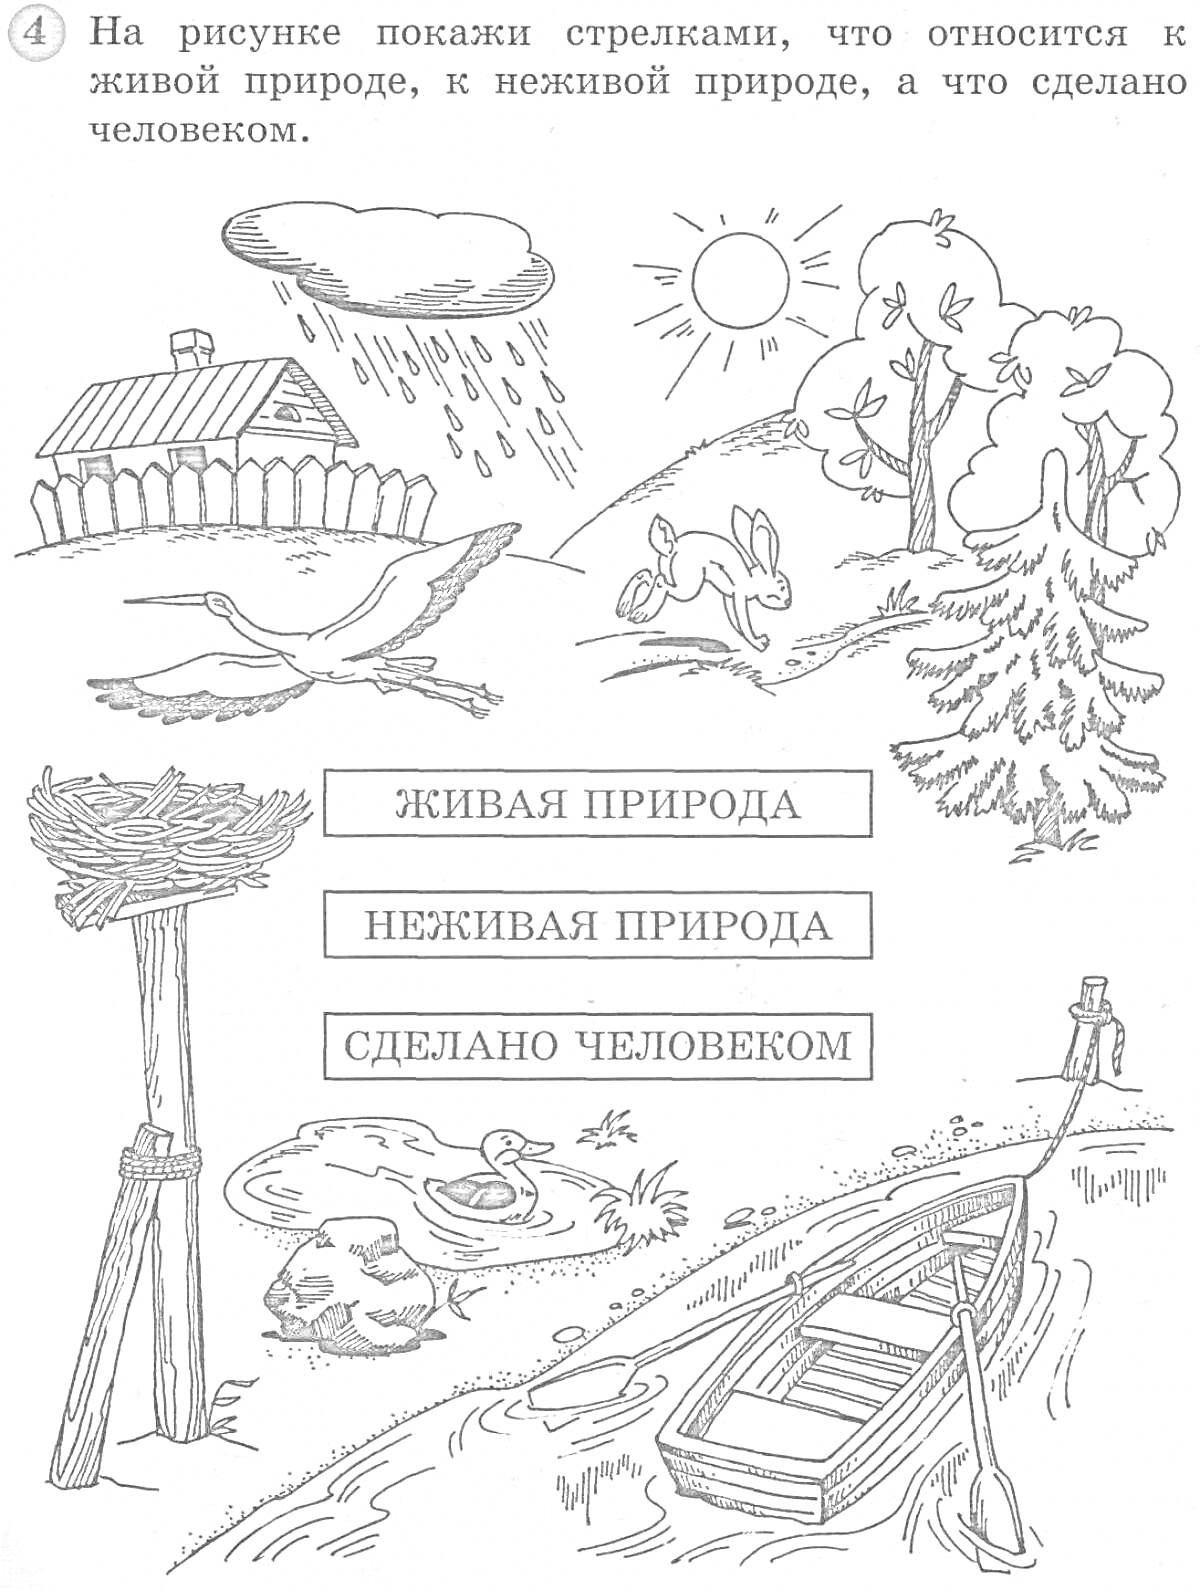 На раскраске изображено: Дом, Солнце, Заяц, Птица, Лодка, Гнездо, Дошкольники